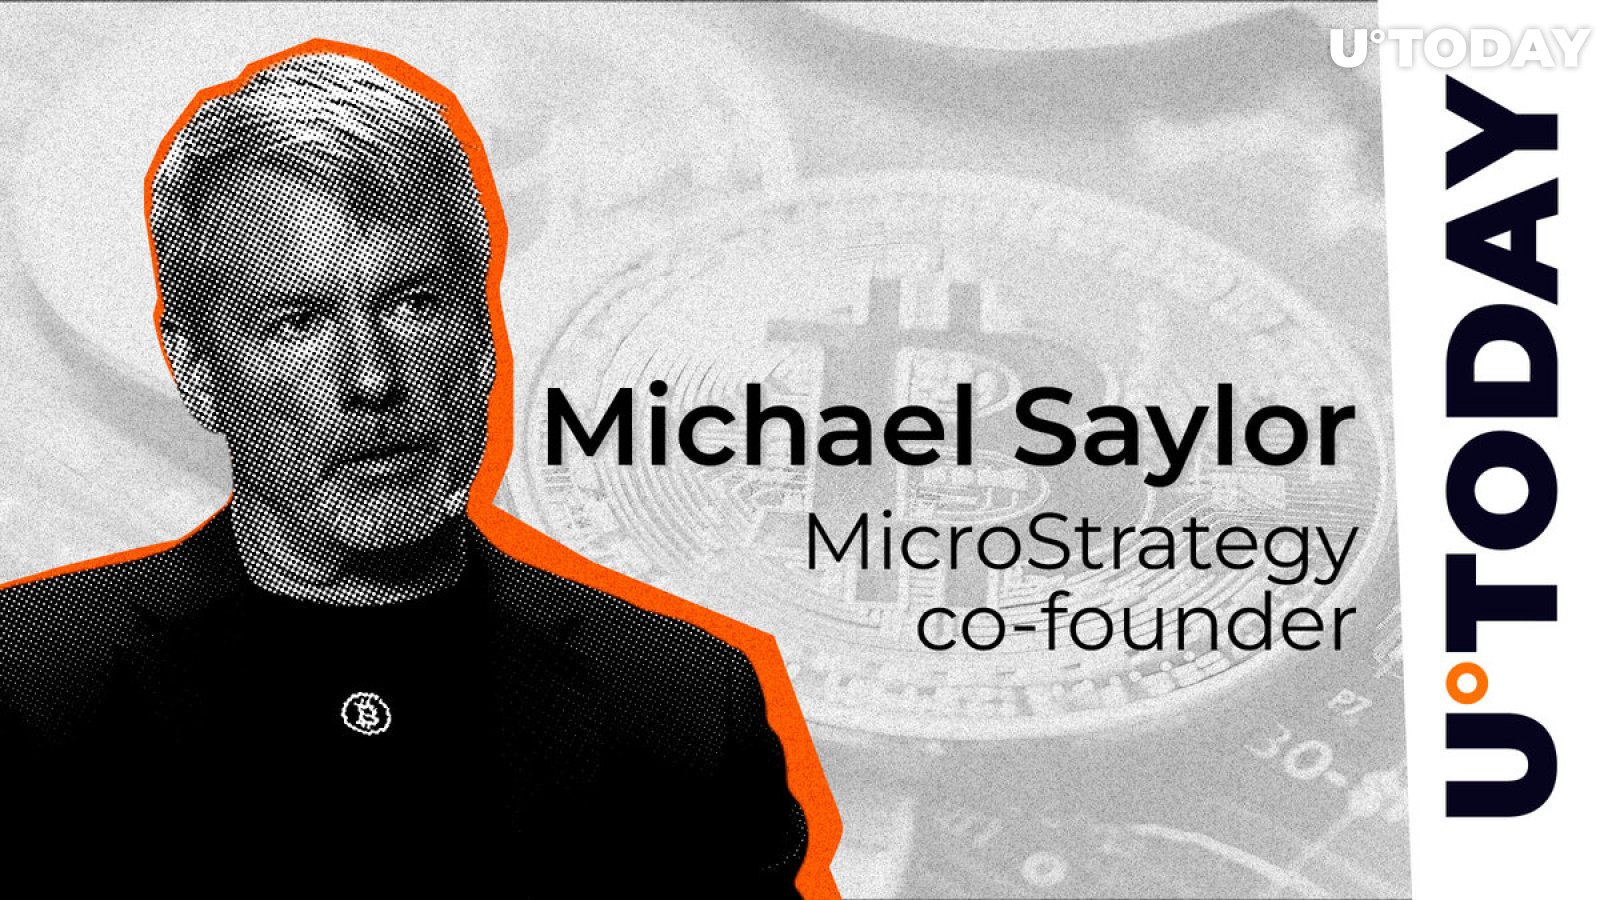 MicroStrategy's Michael Saylor Hails Epic Bitcoin Adoption Milestone